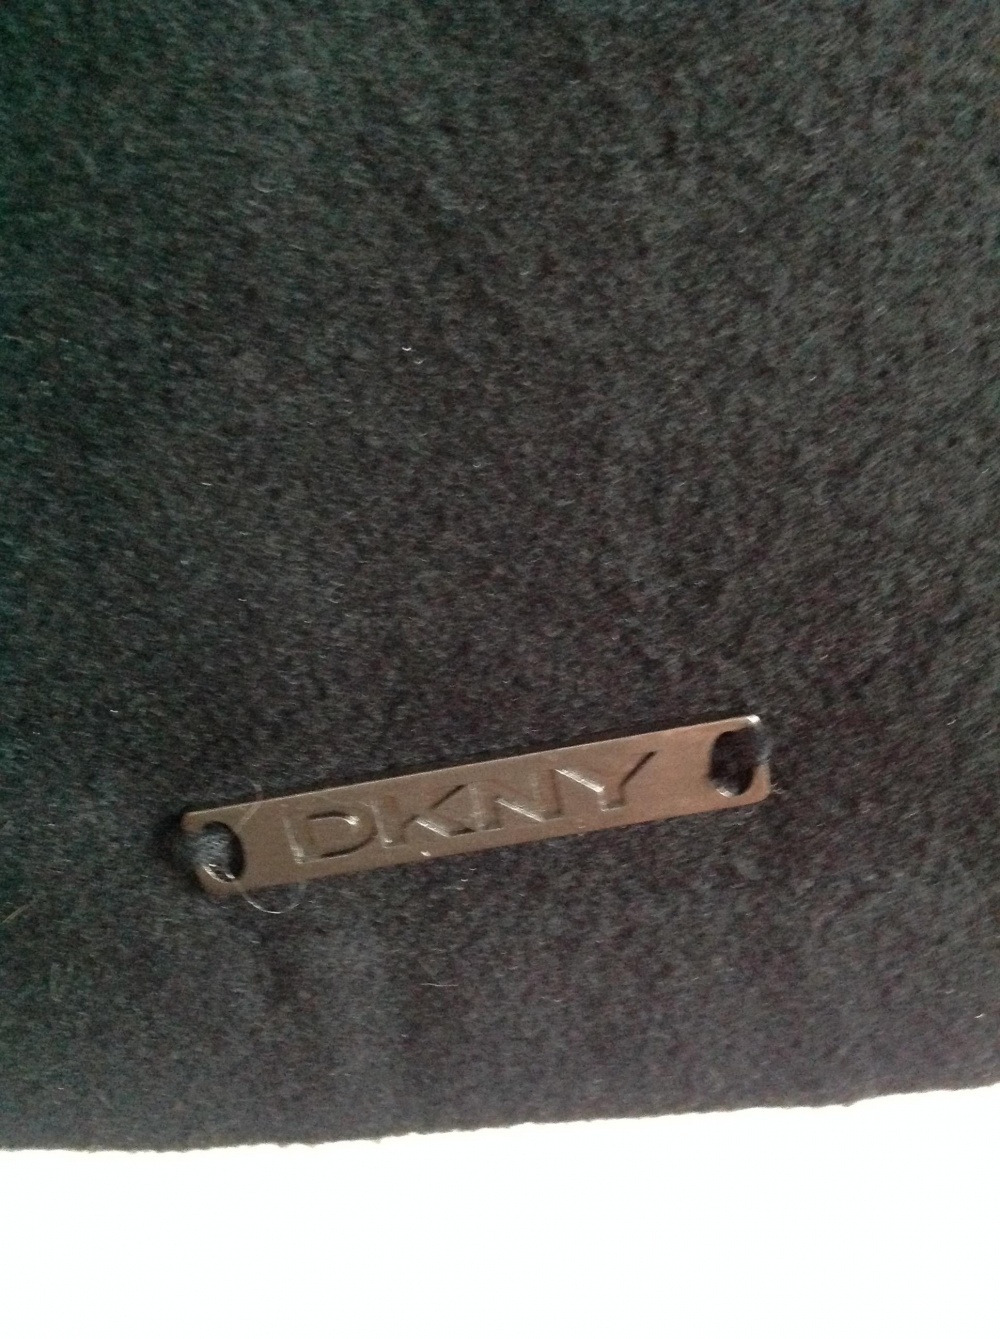 Пальто двубортное/ бушлат DKNY, размер S